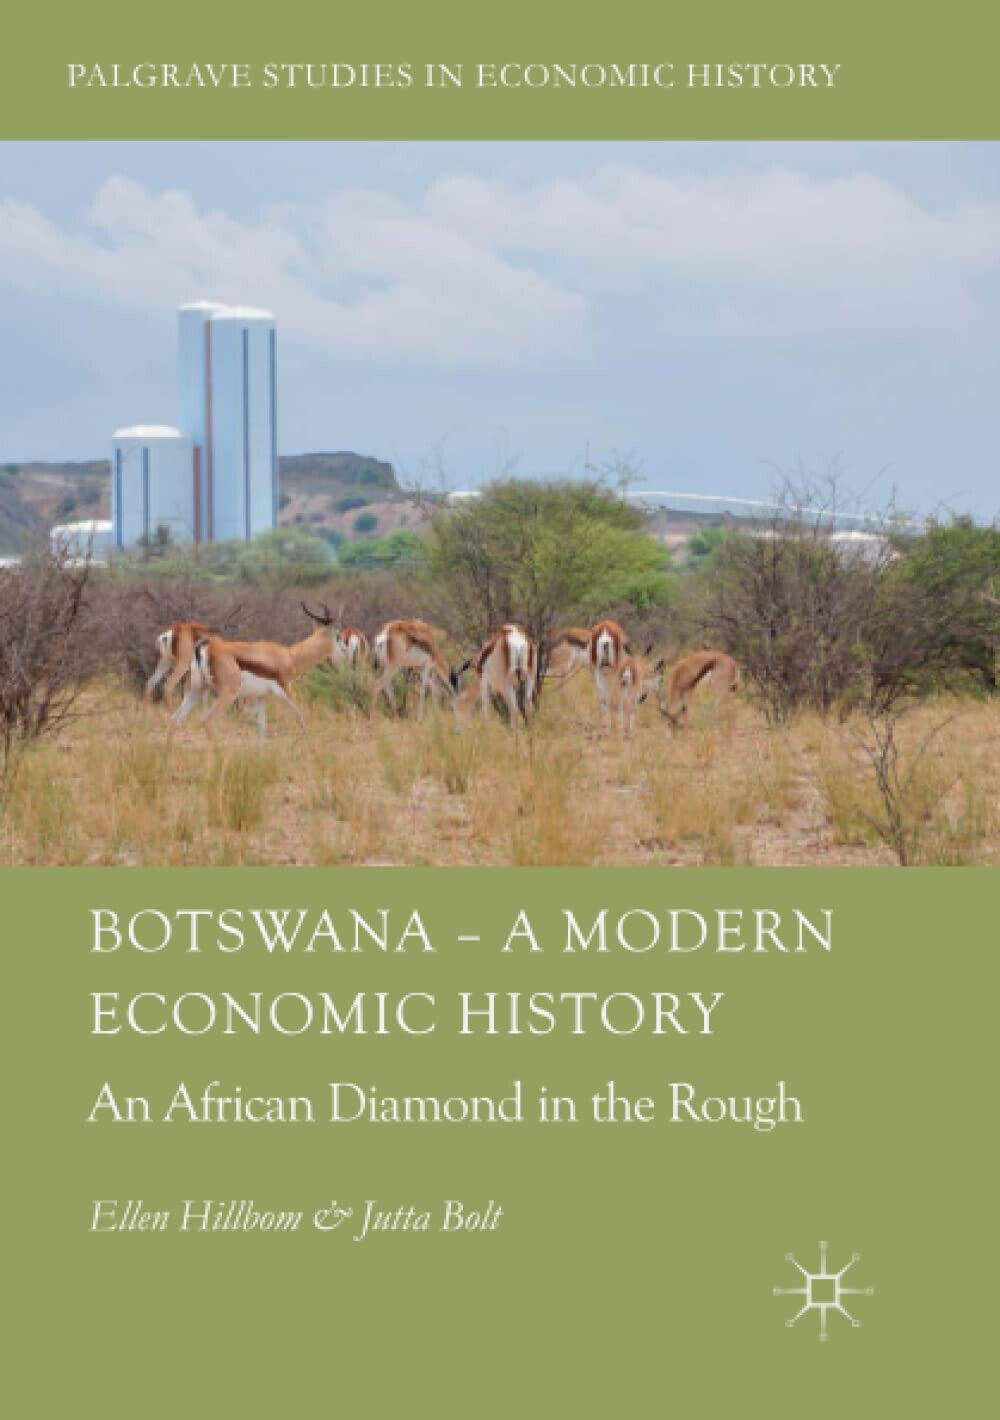 Botswana - A Modern Economic History - Jutta Bolt, Ellen Hillbom - Palgrave,2019